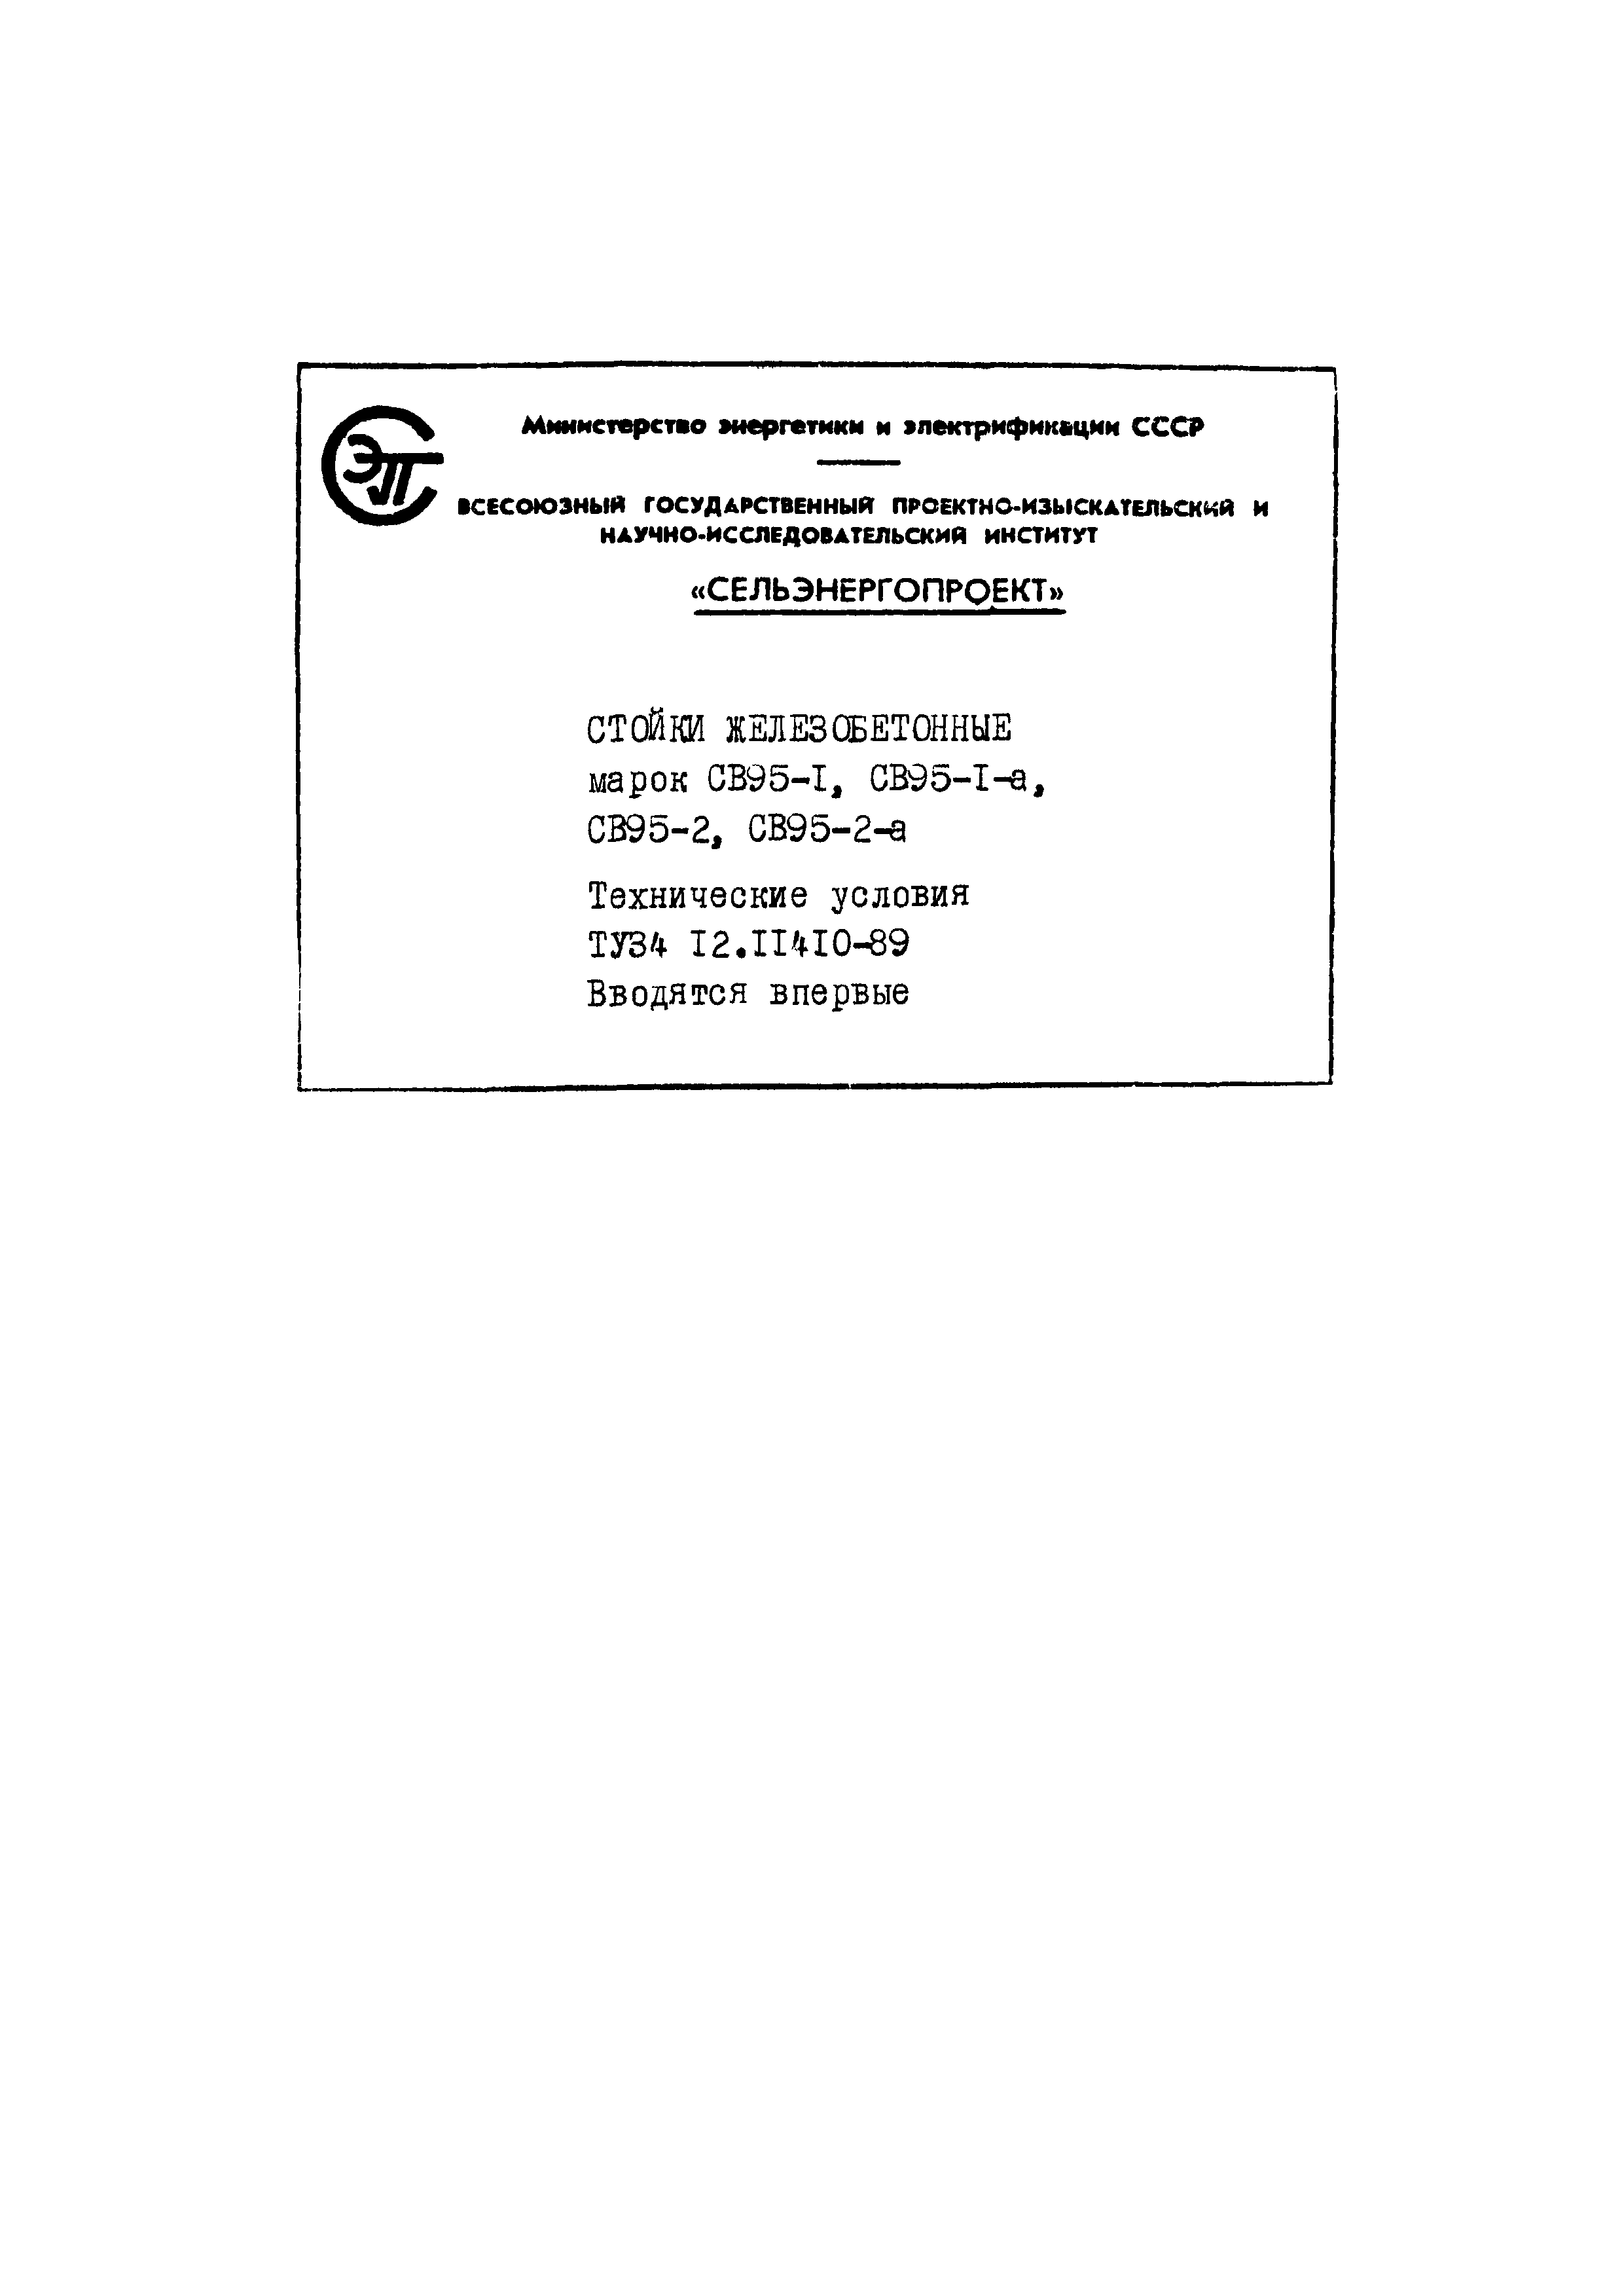 ТУ 34 12.11410-89